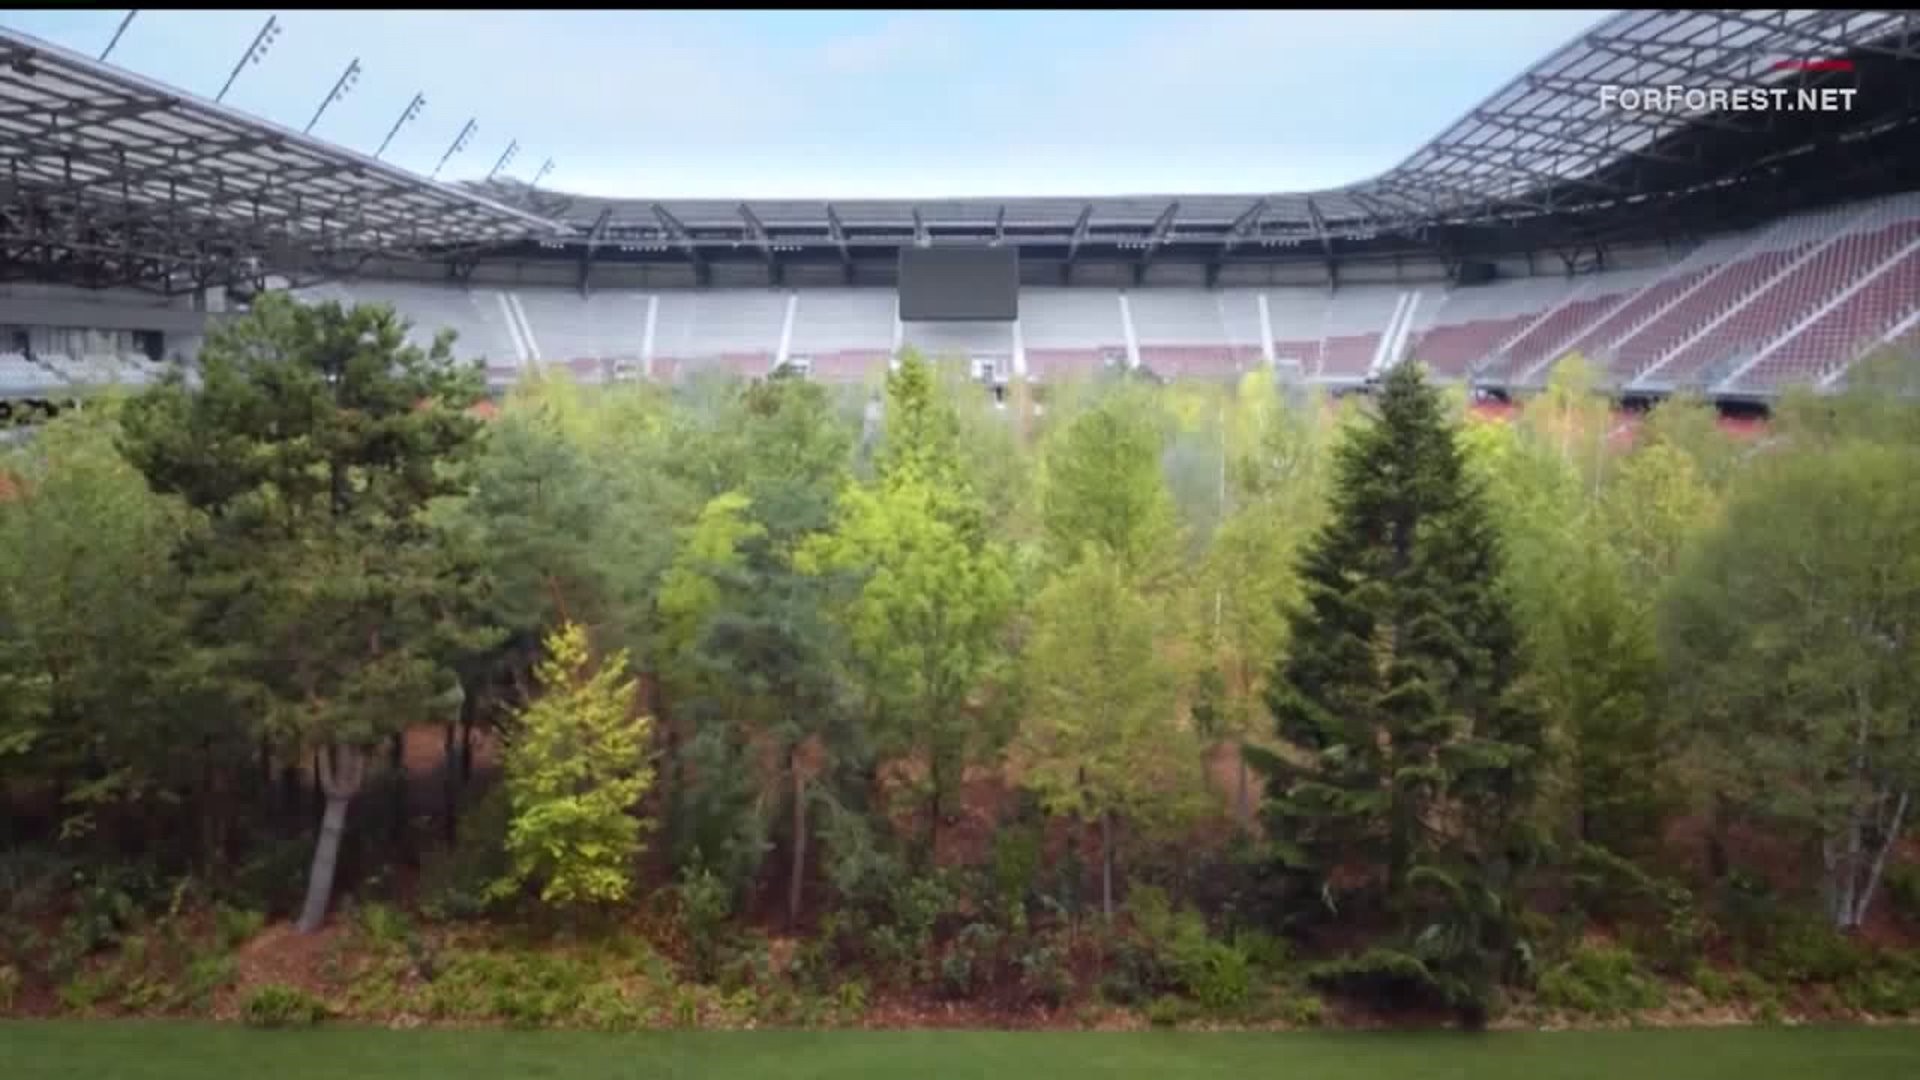 Austrian football stadium filled with trees